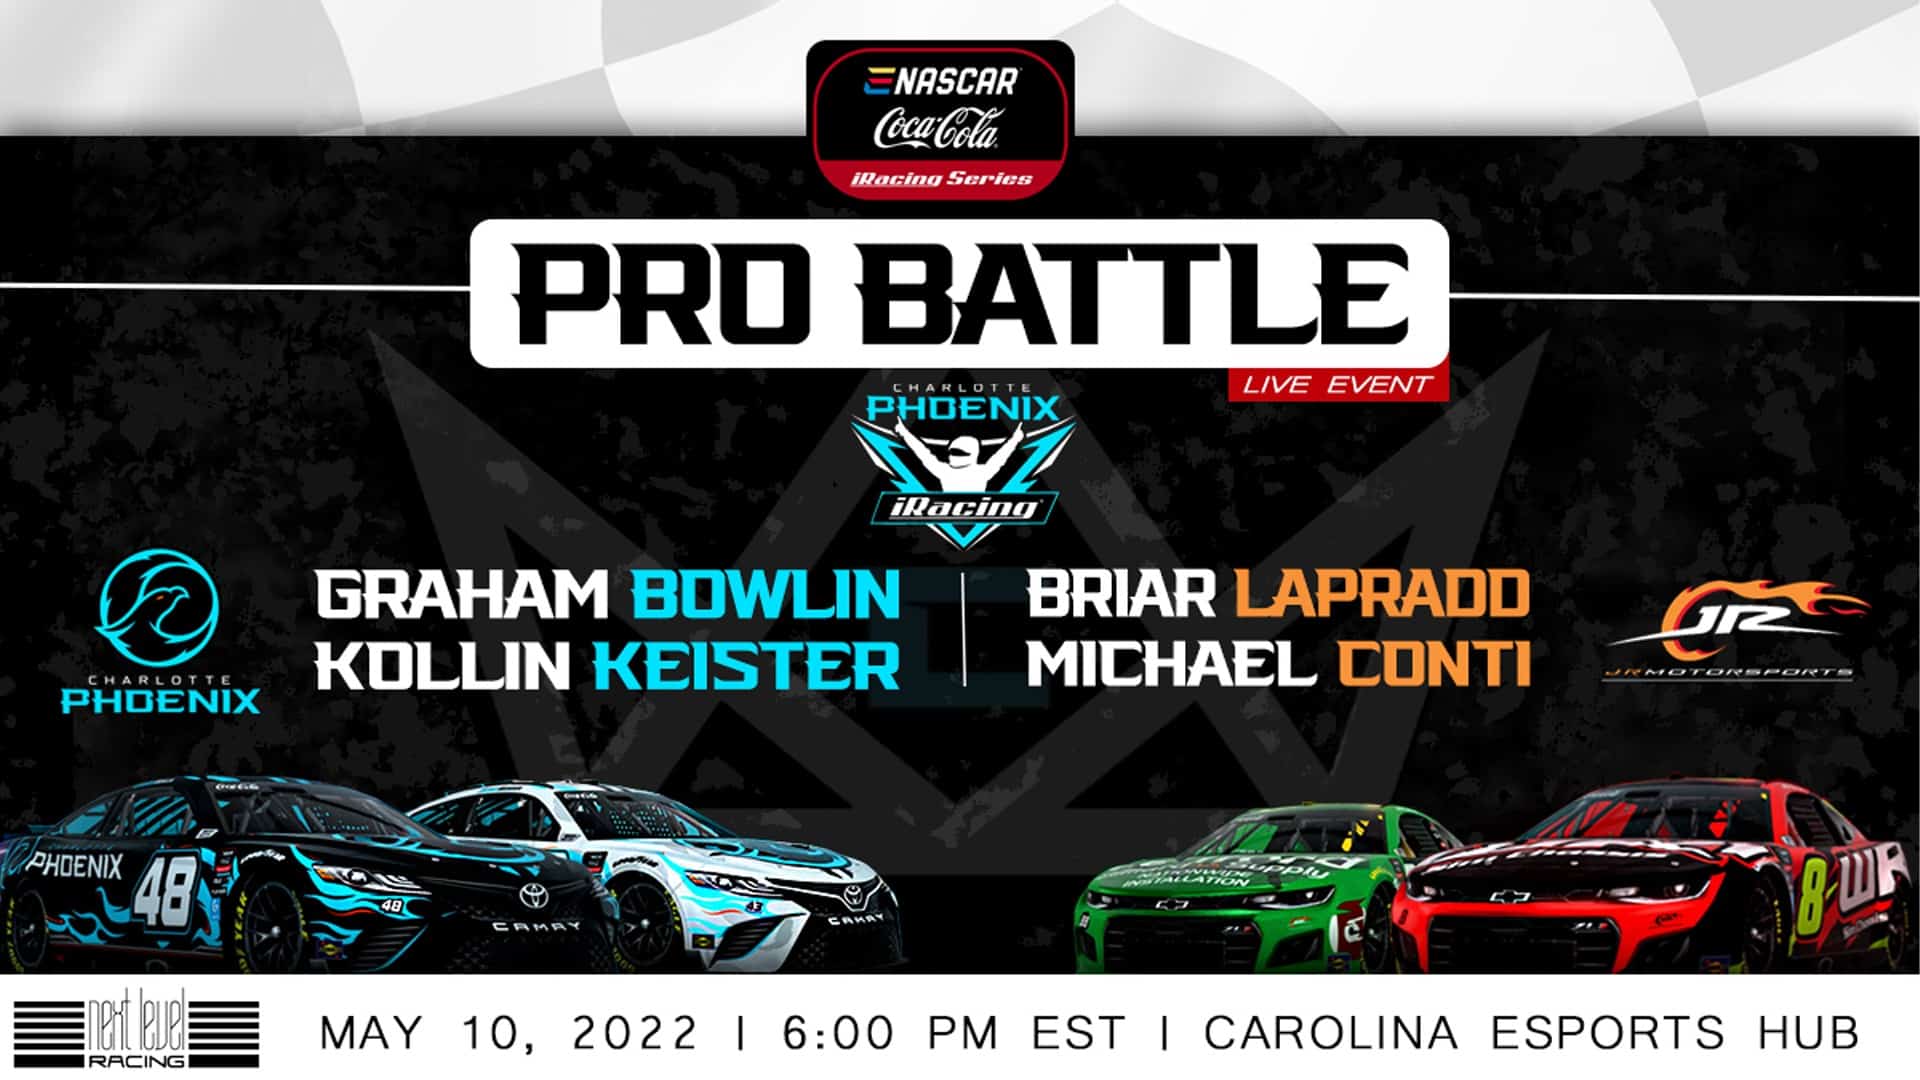 Carolina Esports Hub to host live eNASCAR 'Pro Battle' on 10th May